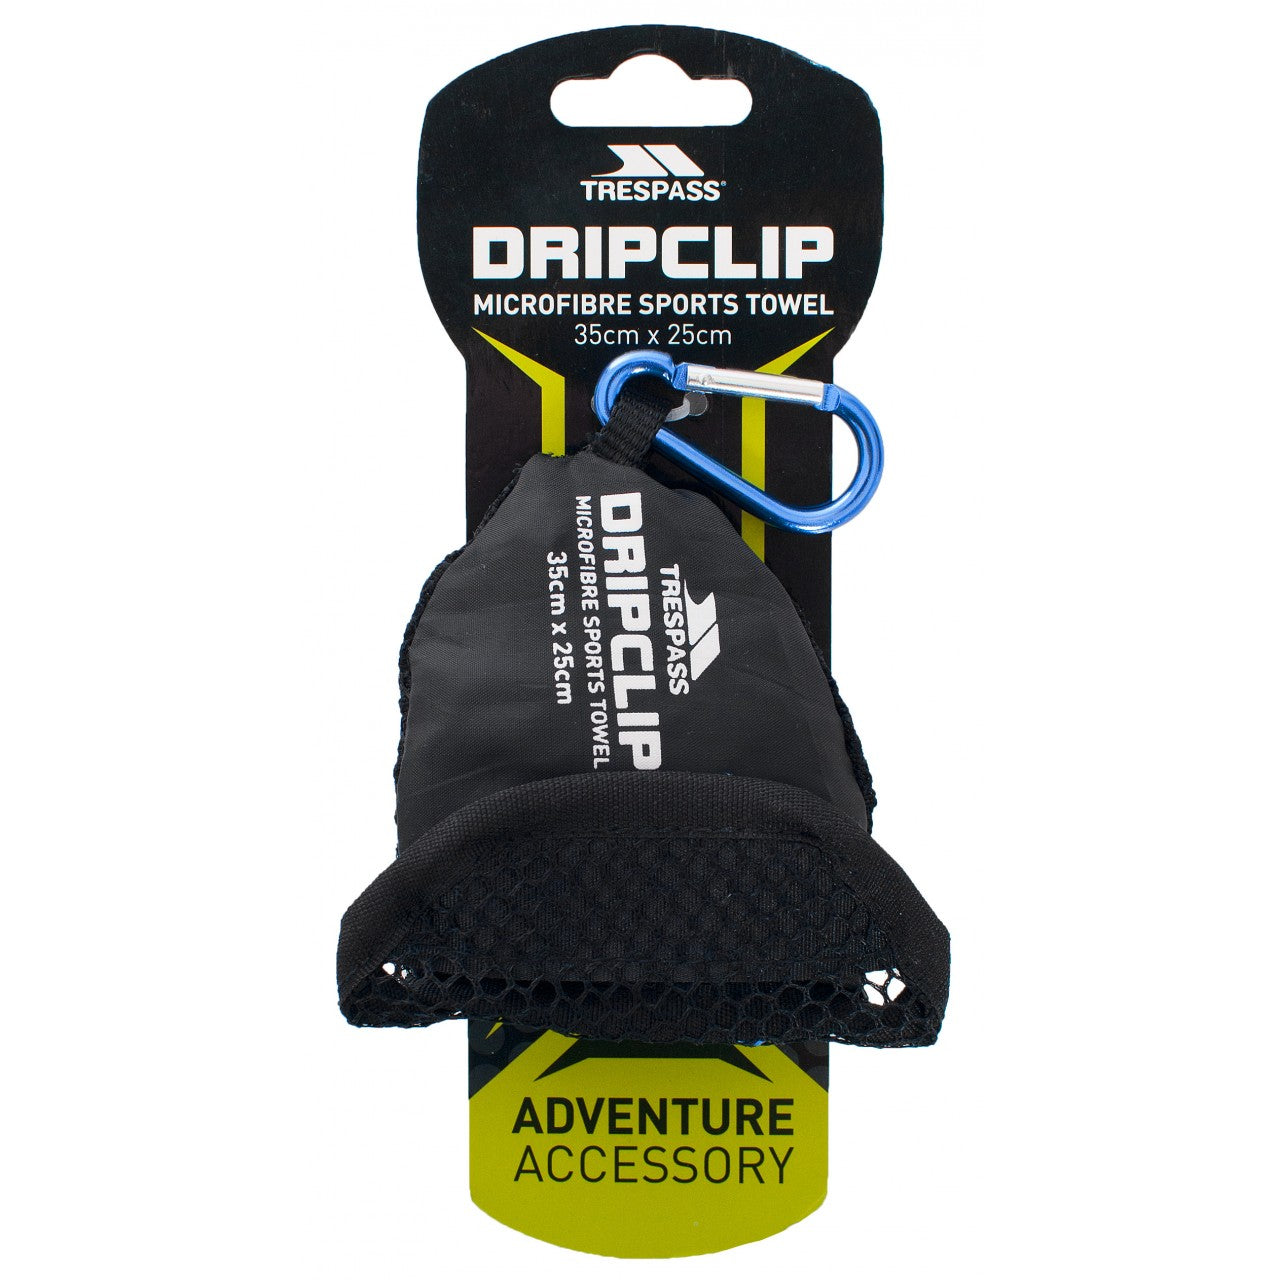 Dripclip Microfibre Sports Towel